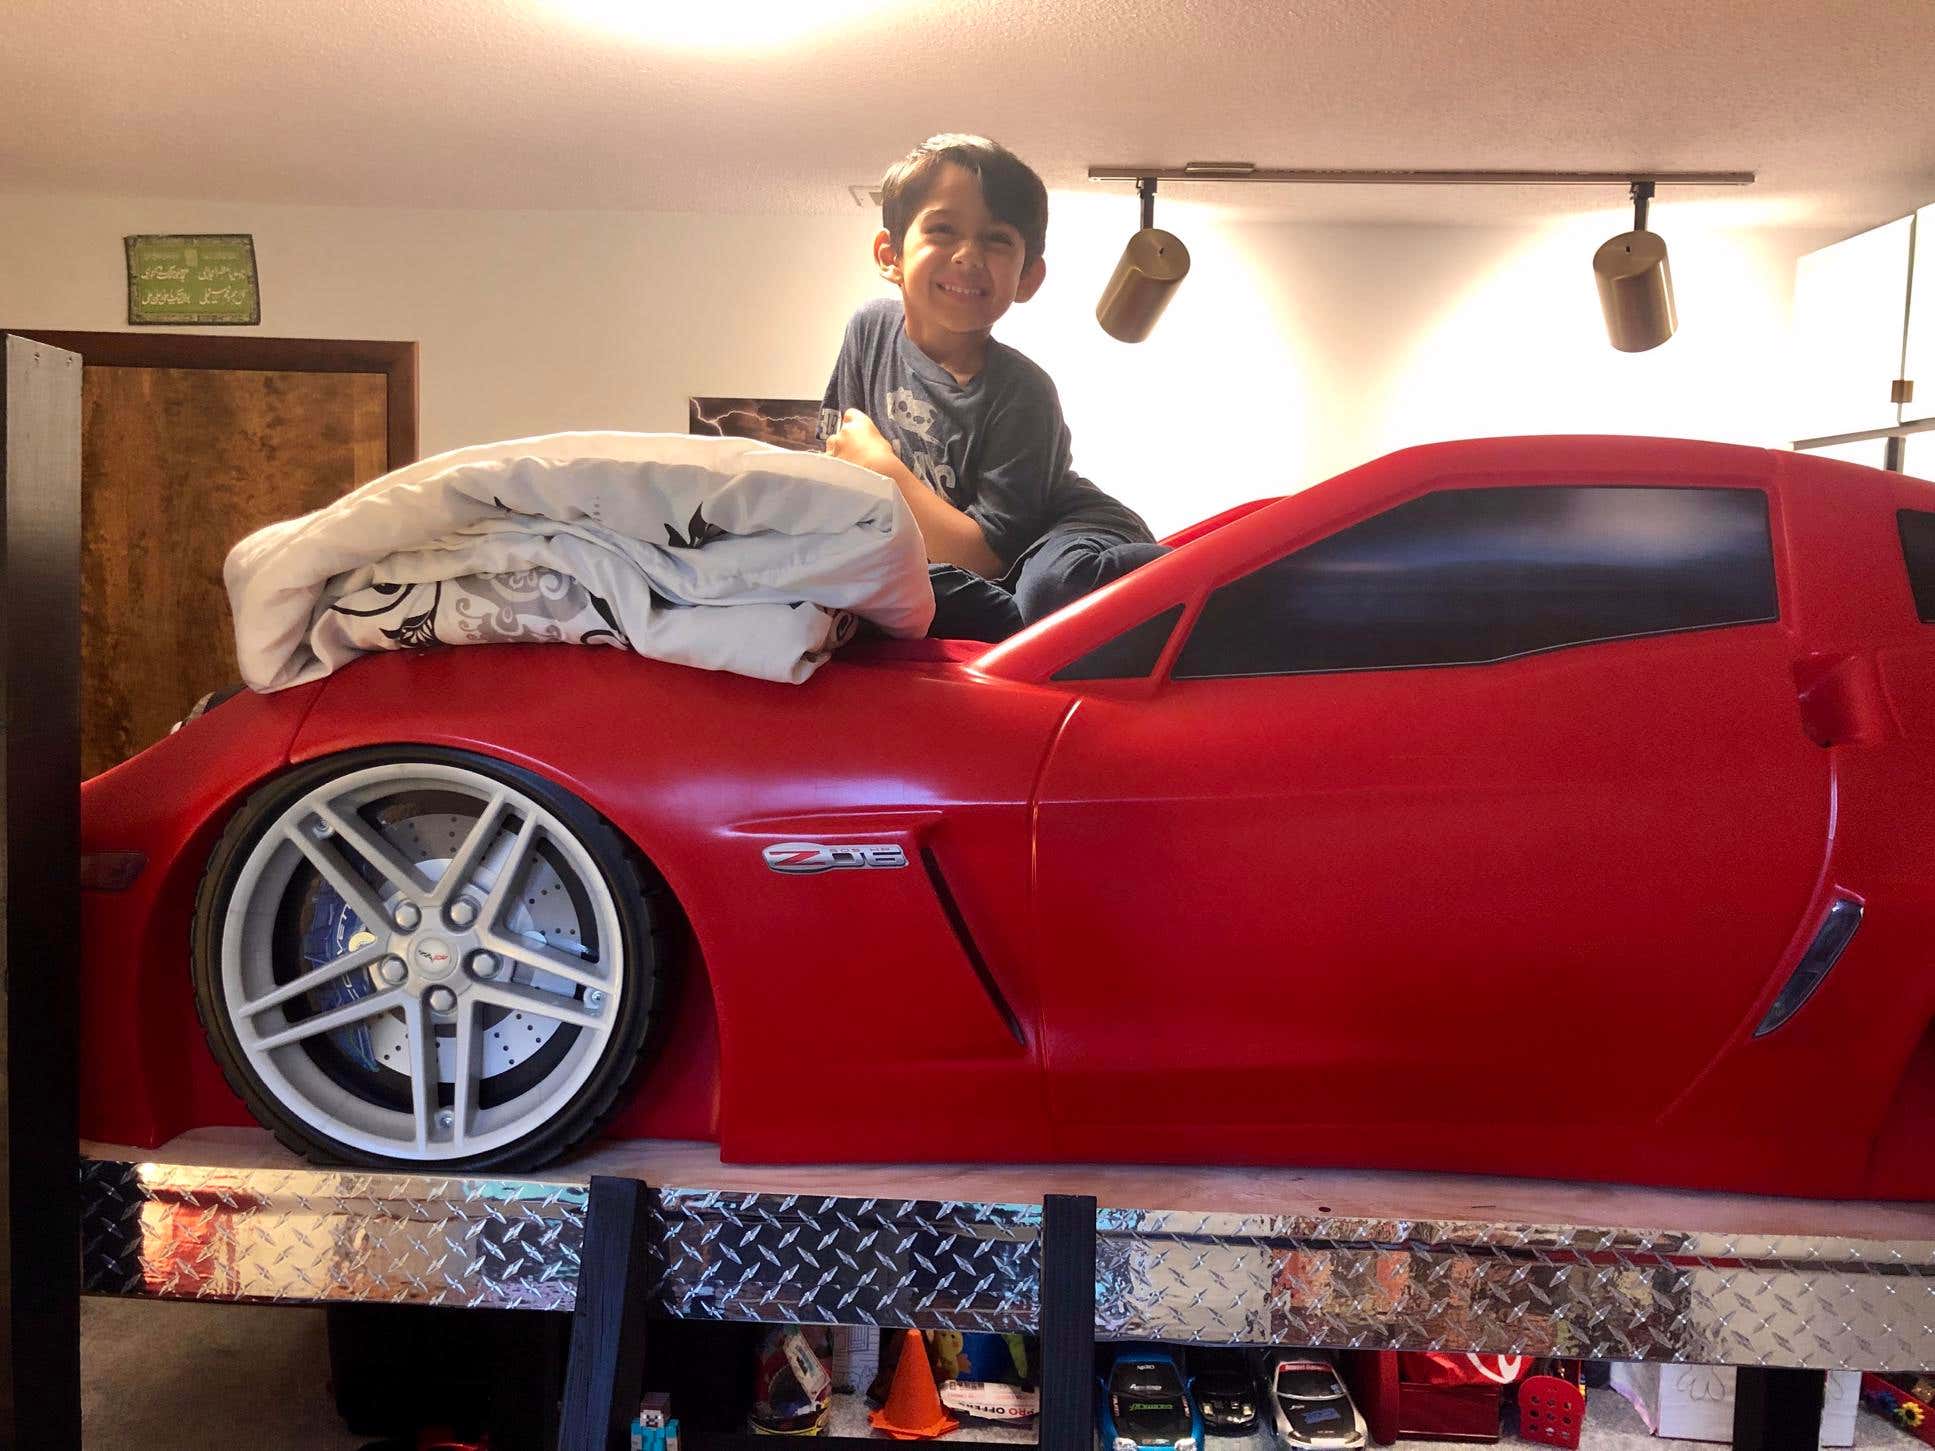 Garage Lift Complete With Corvette Z06, Car Bunk Beds